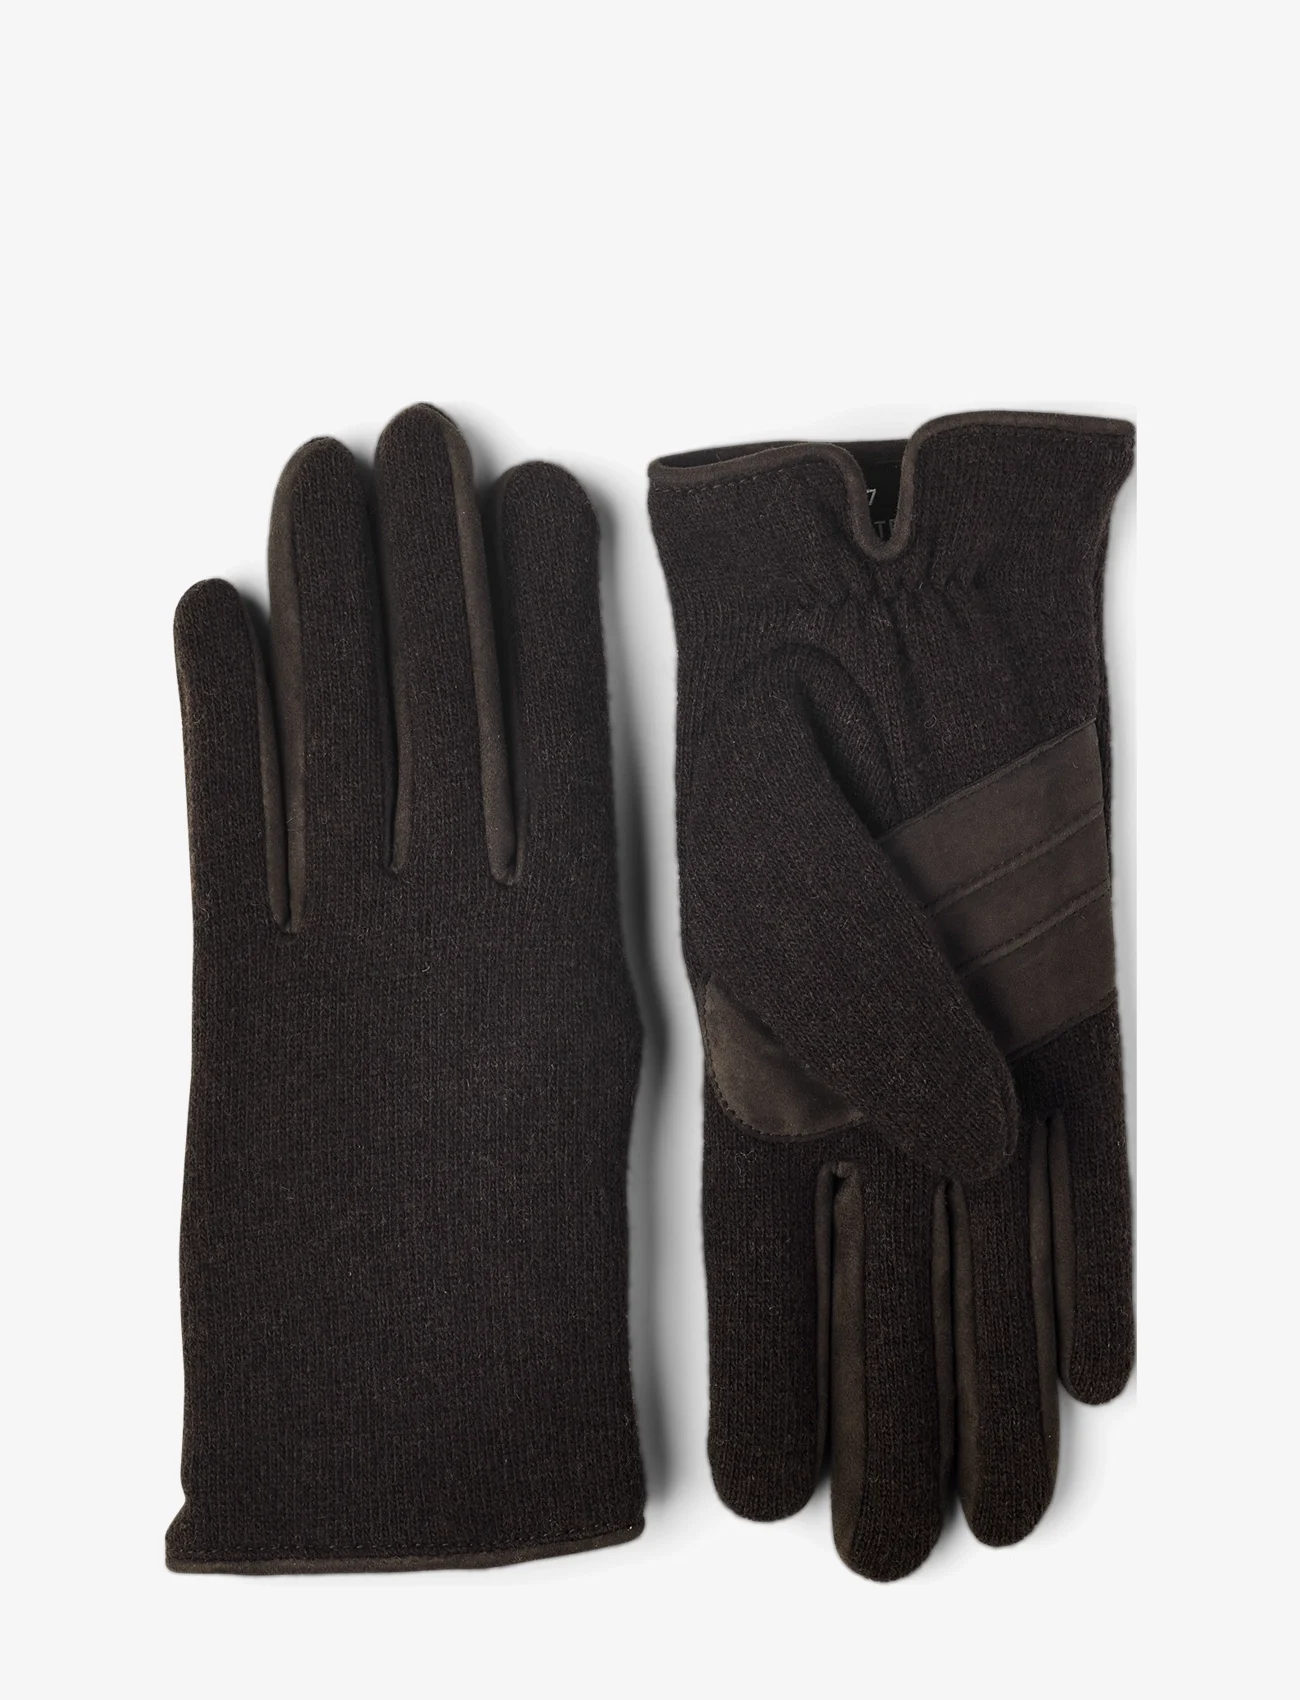 Hestra - Ellen - gloves - black - 0